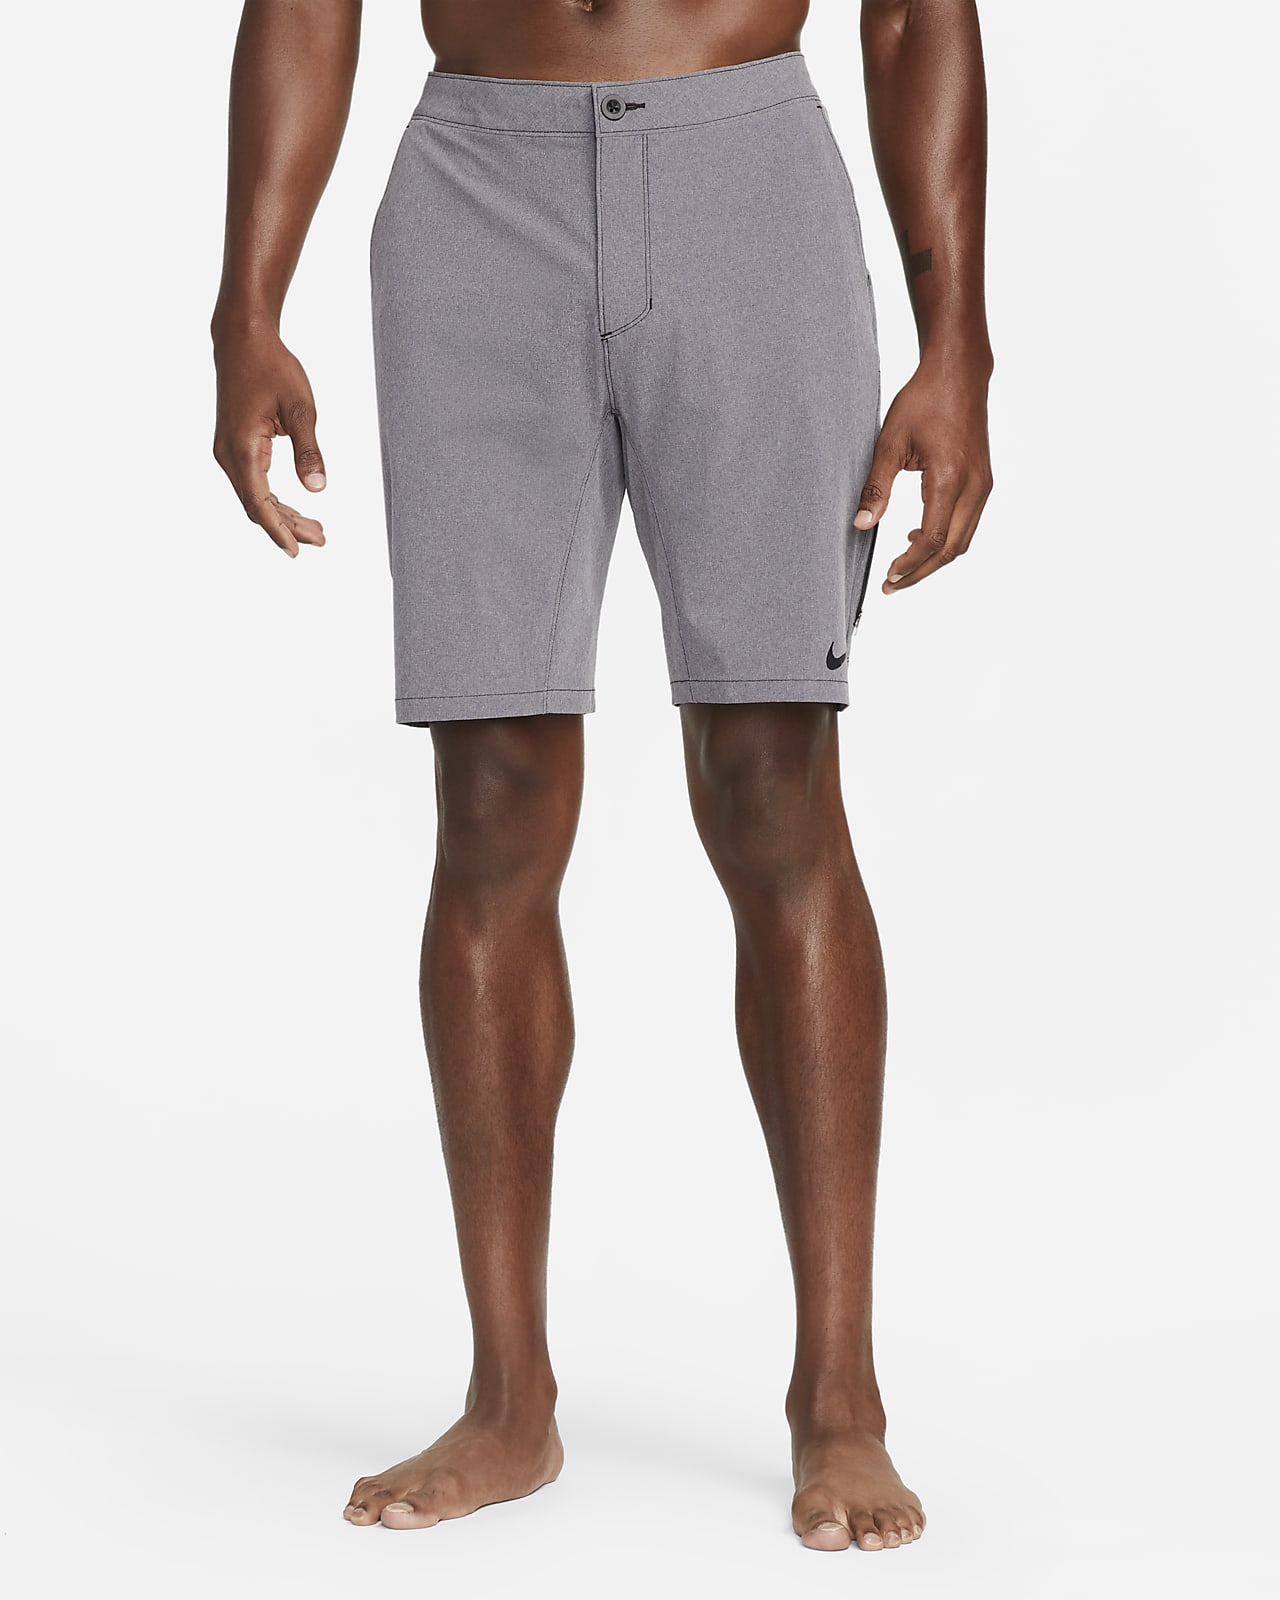 Shorts ibridi da mare 23 cm Nike Flow – Uomo